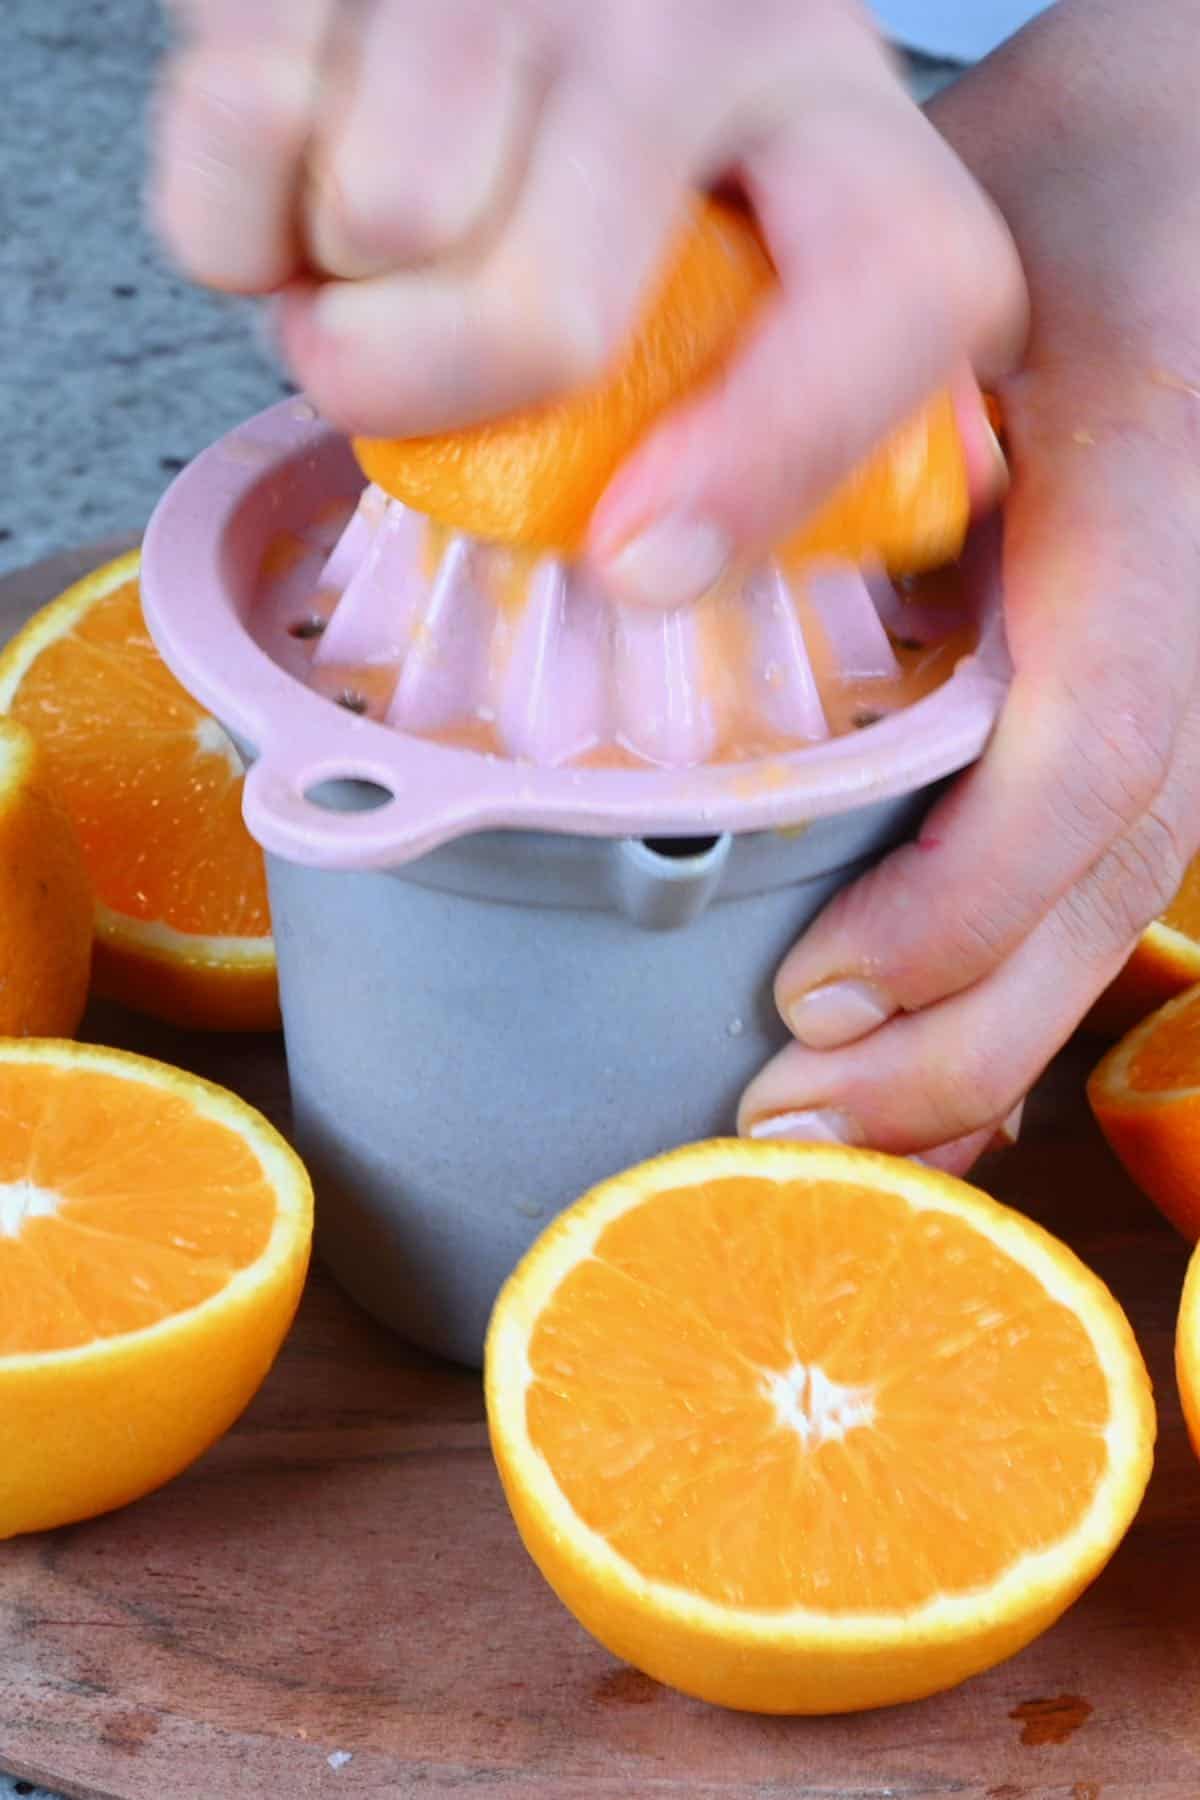 Juicing an orange on a citrus juicer